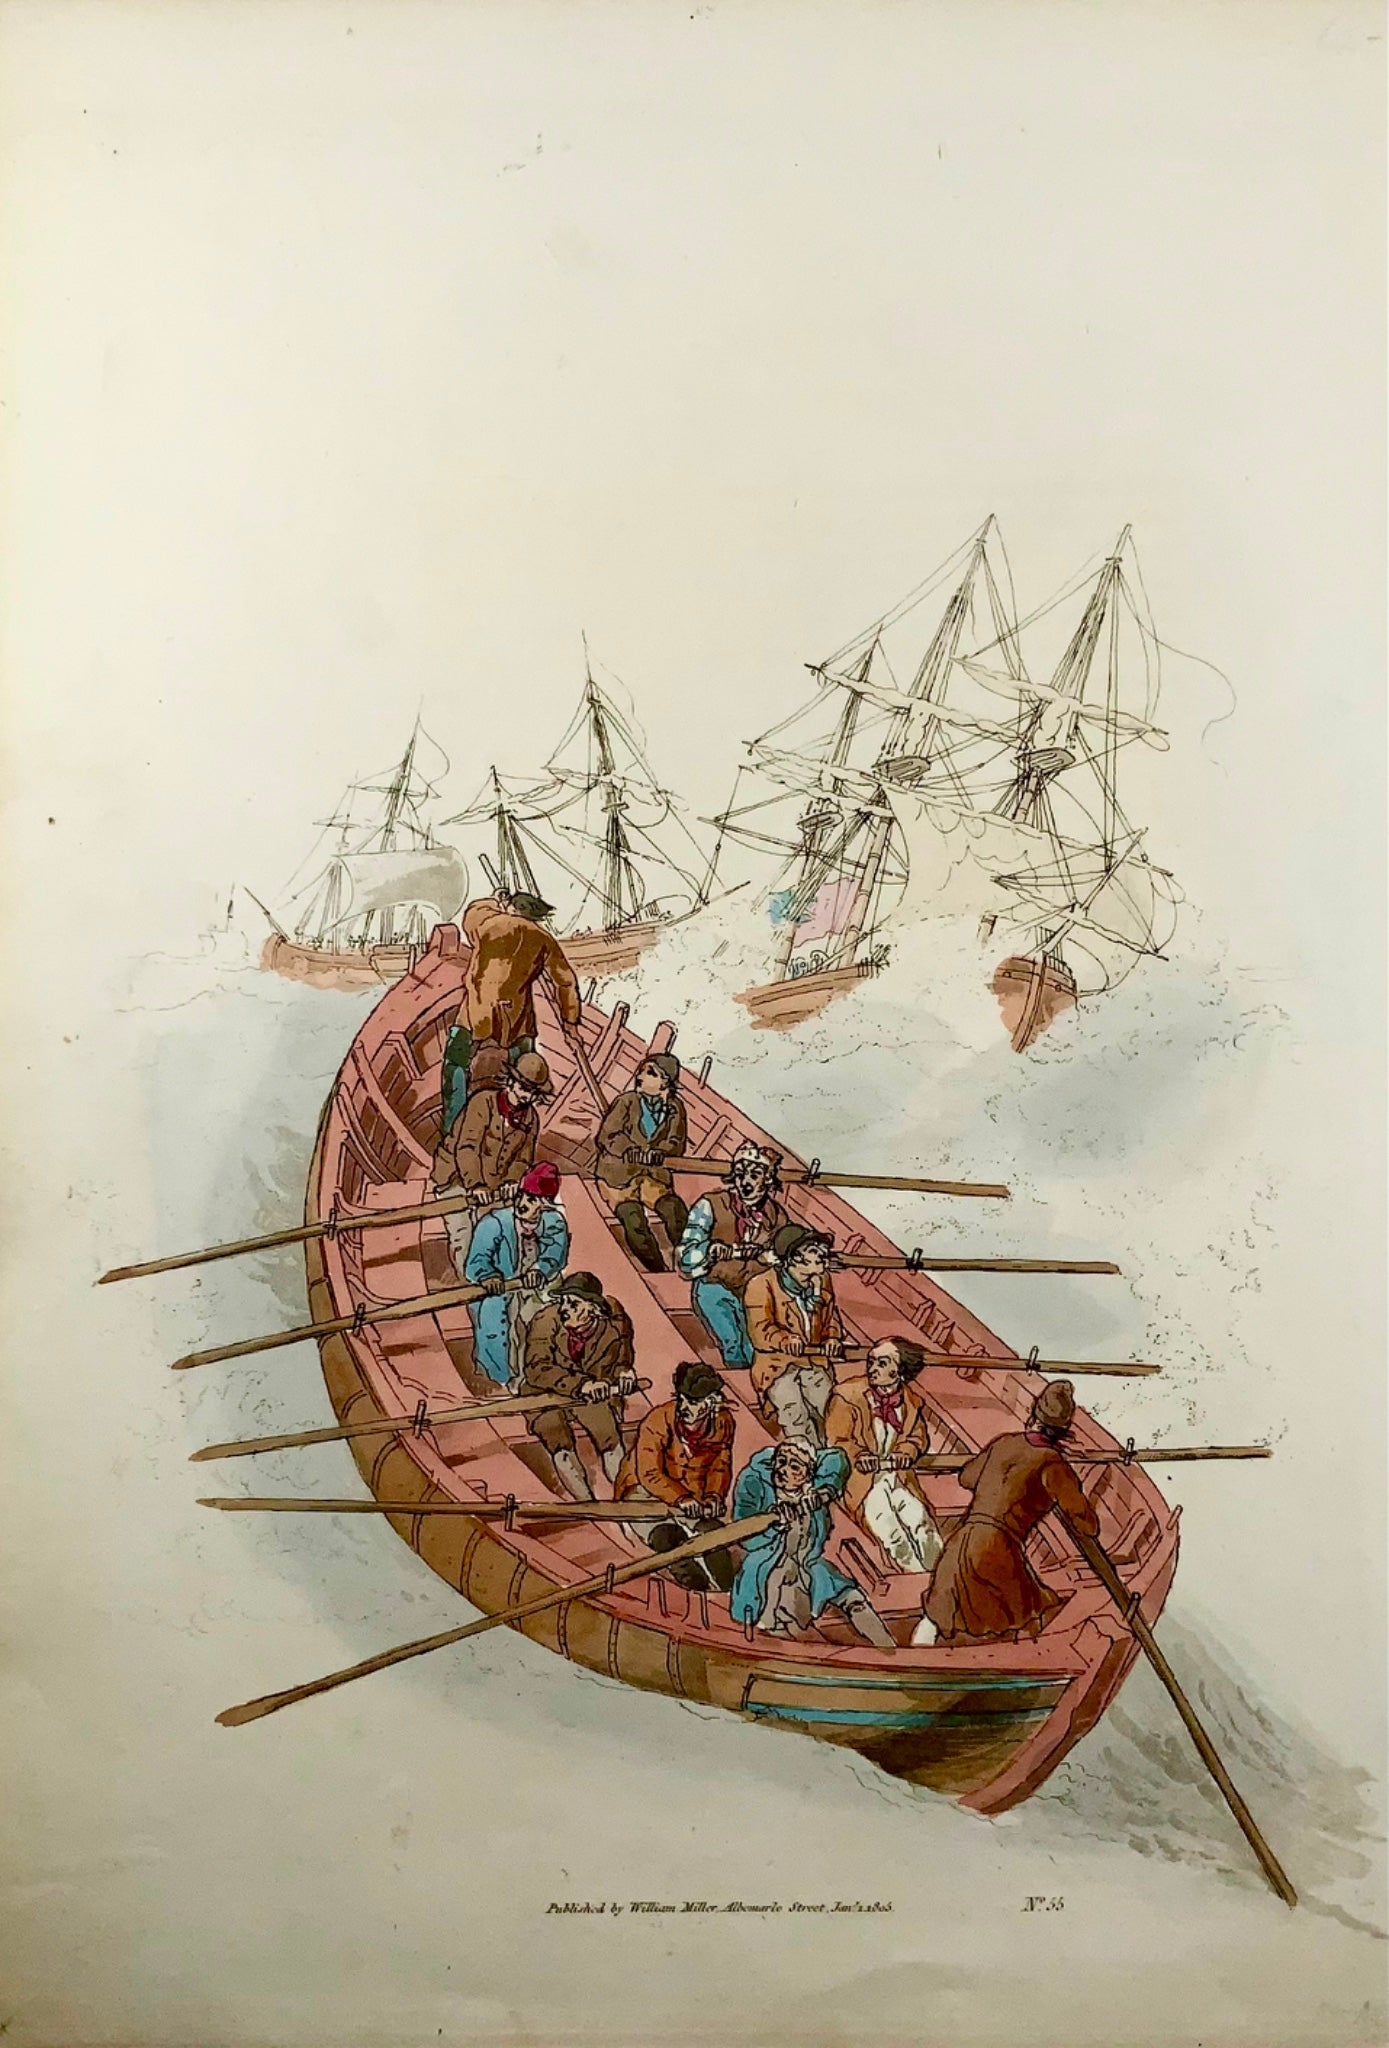 1805 Wm Miller, The Life Boat, Shipwreck, aquatinte folio avec couleur à la main, maritime